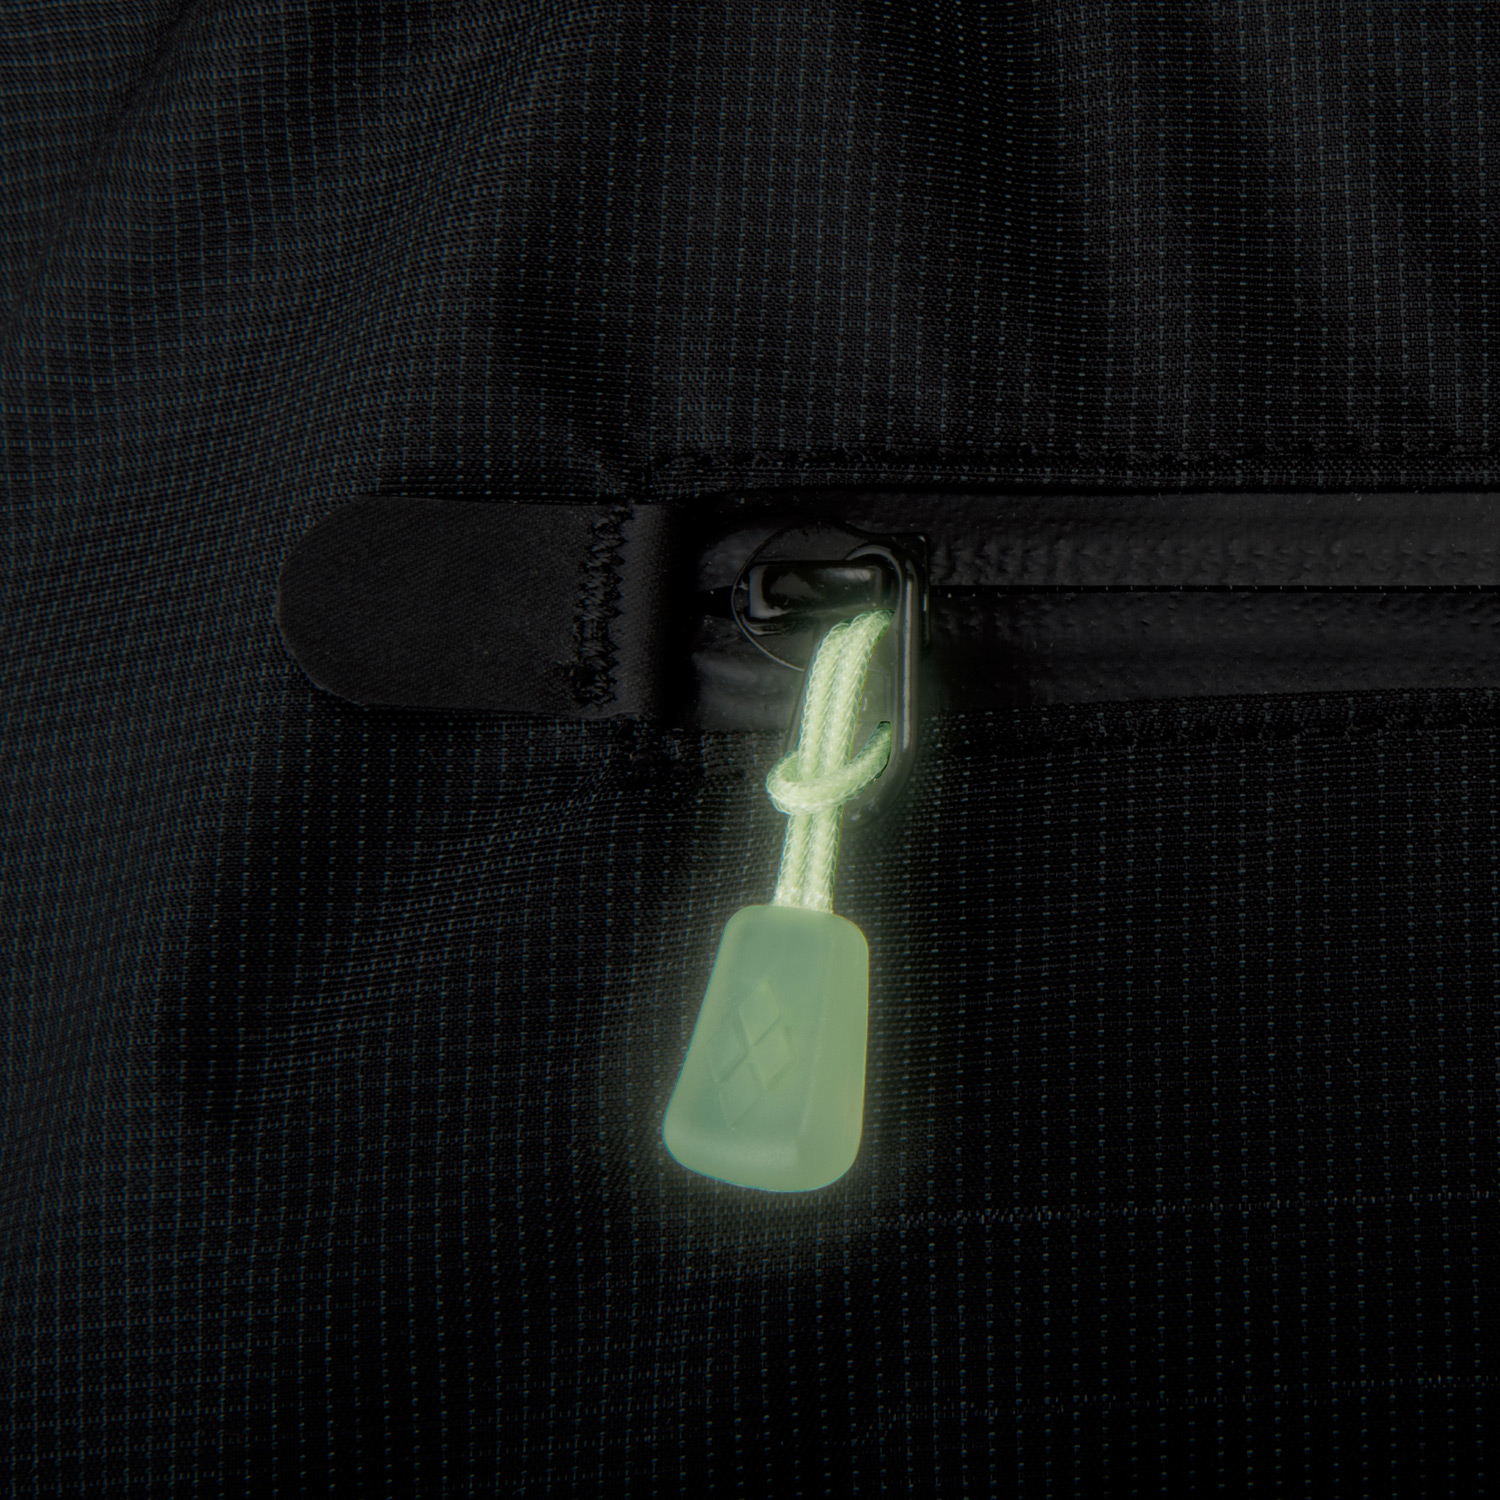 Glow in the Dark Zipper Pulls for all your hammocks.